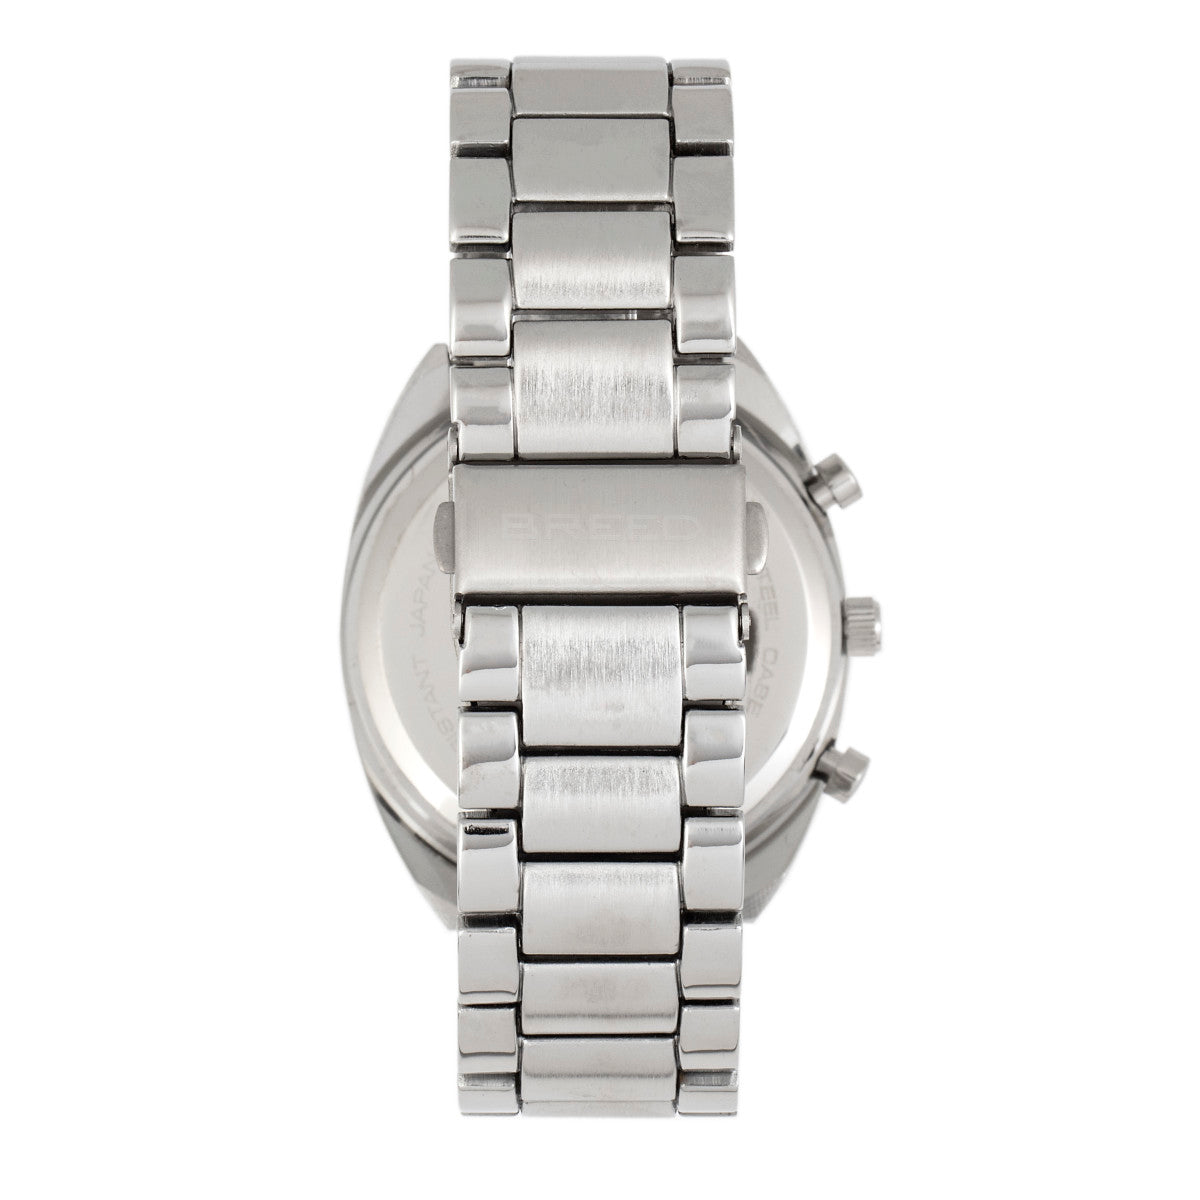 Breed Racer Chronograph Bracelet Watch w/Date - Silver/Black - BRD8501